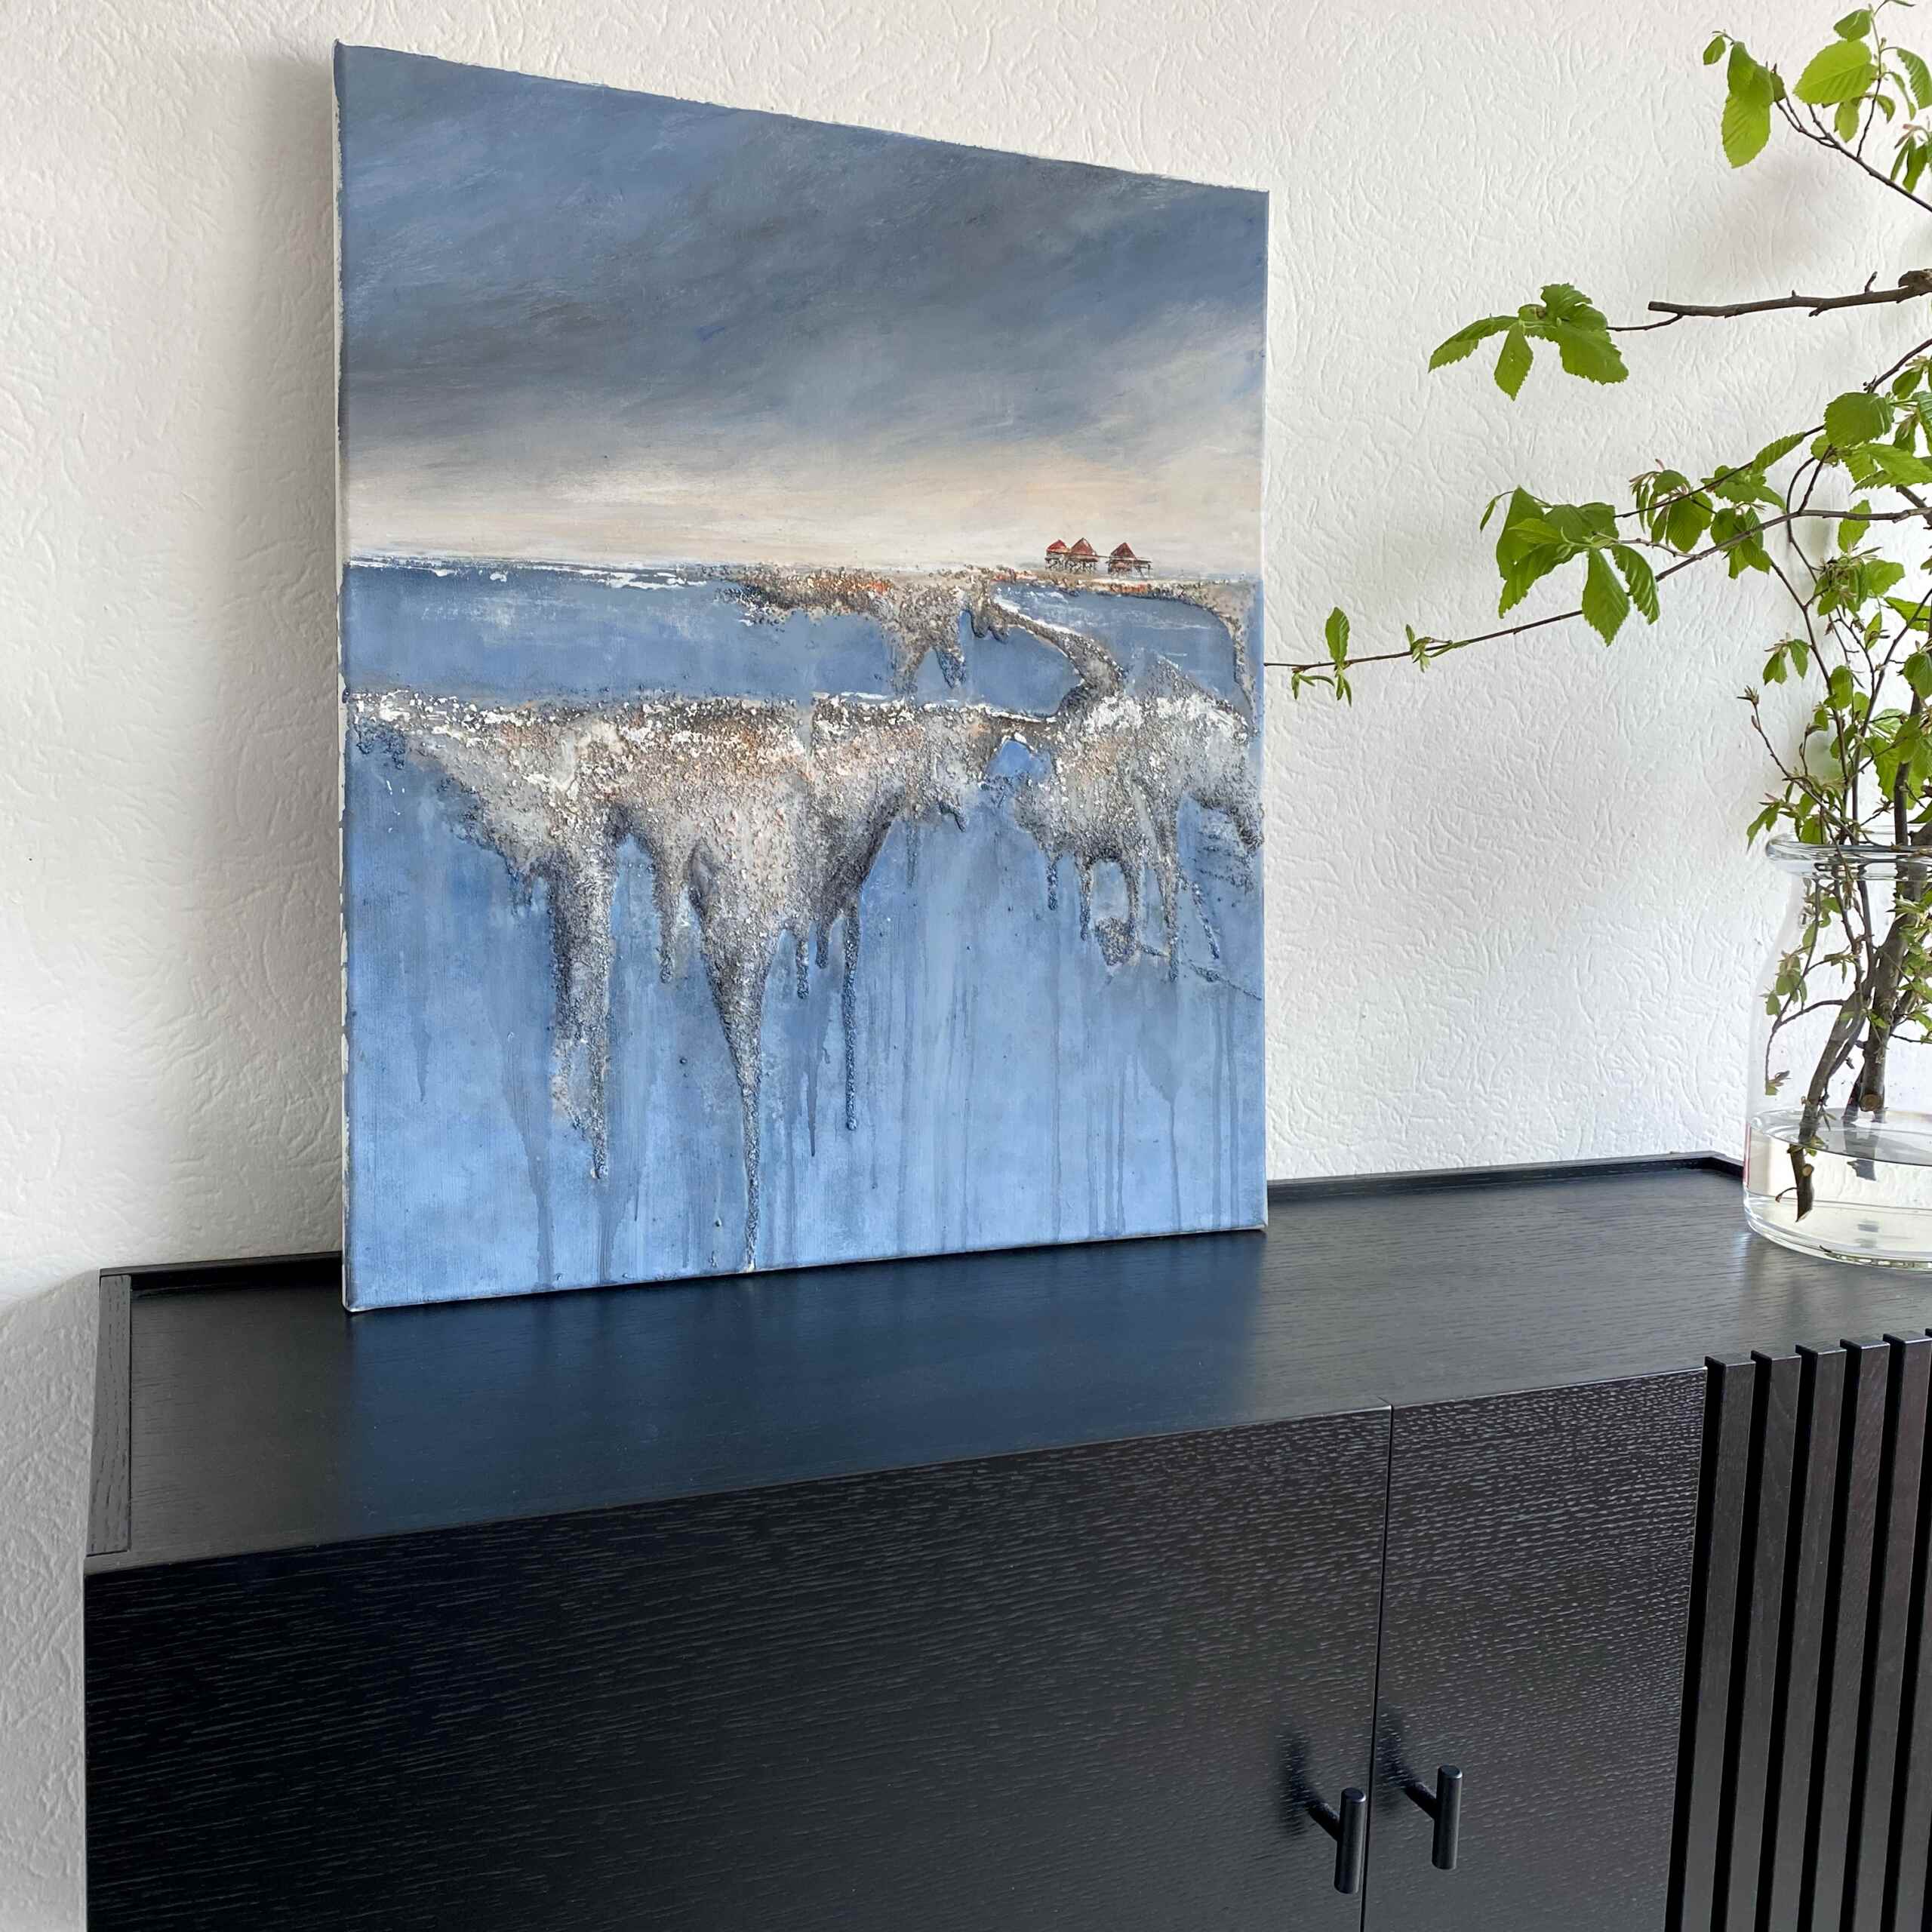 Artwork "Water Currents No 1" by Nina Groth